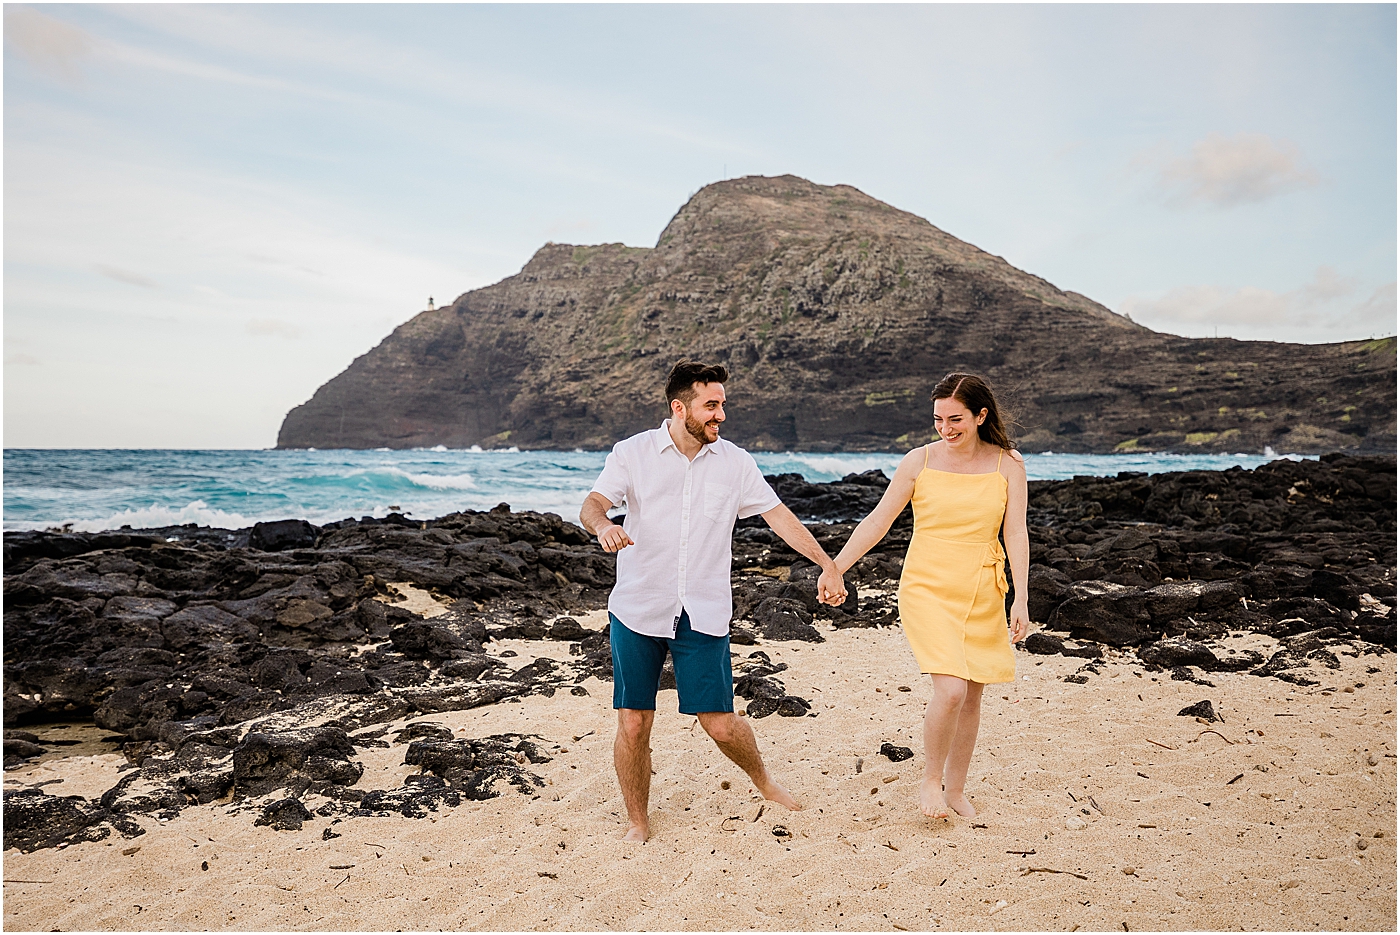 Newlywed couple on the beach during their honeymoon in hawaii